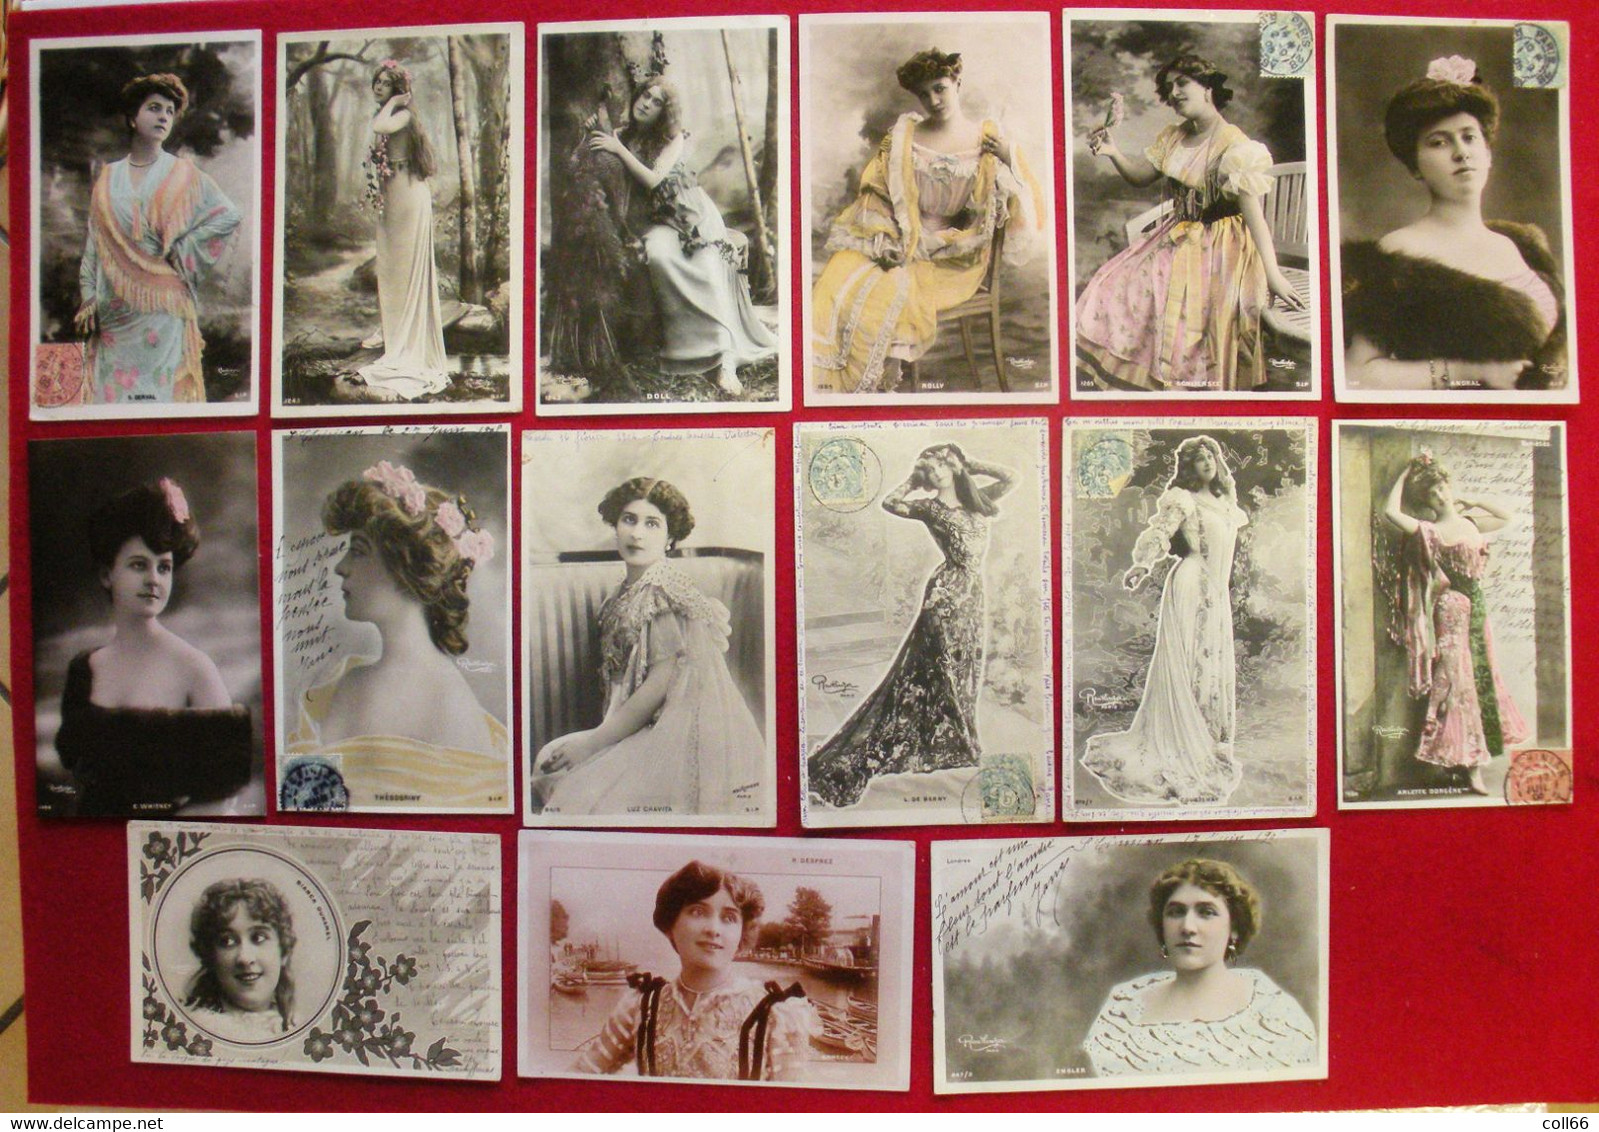 Lot 136 cartes postales 1904-1909 artistes et vedettes même famille Larose éditeur Reutlinger Paris Franco port/Europe